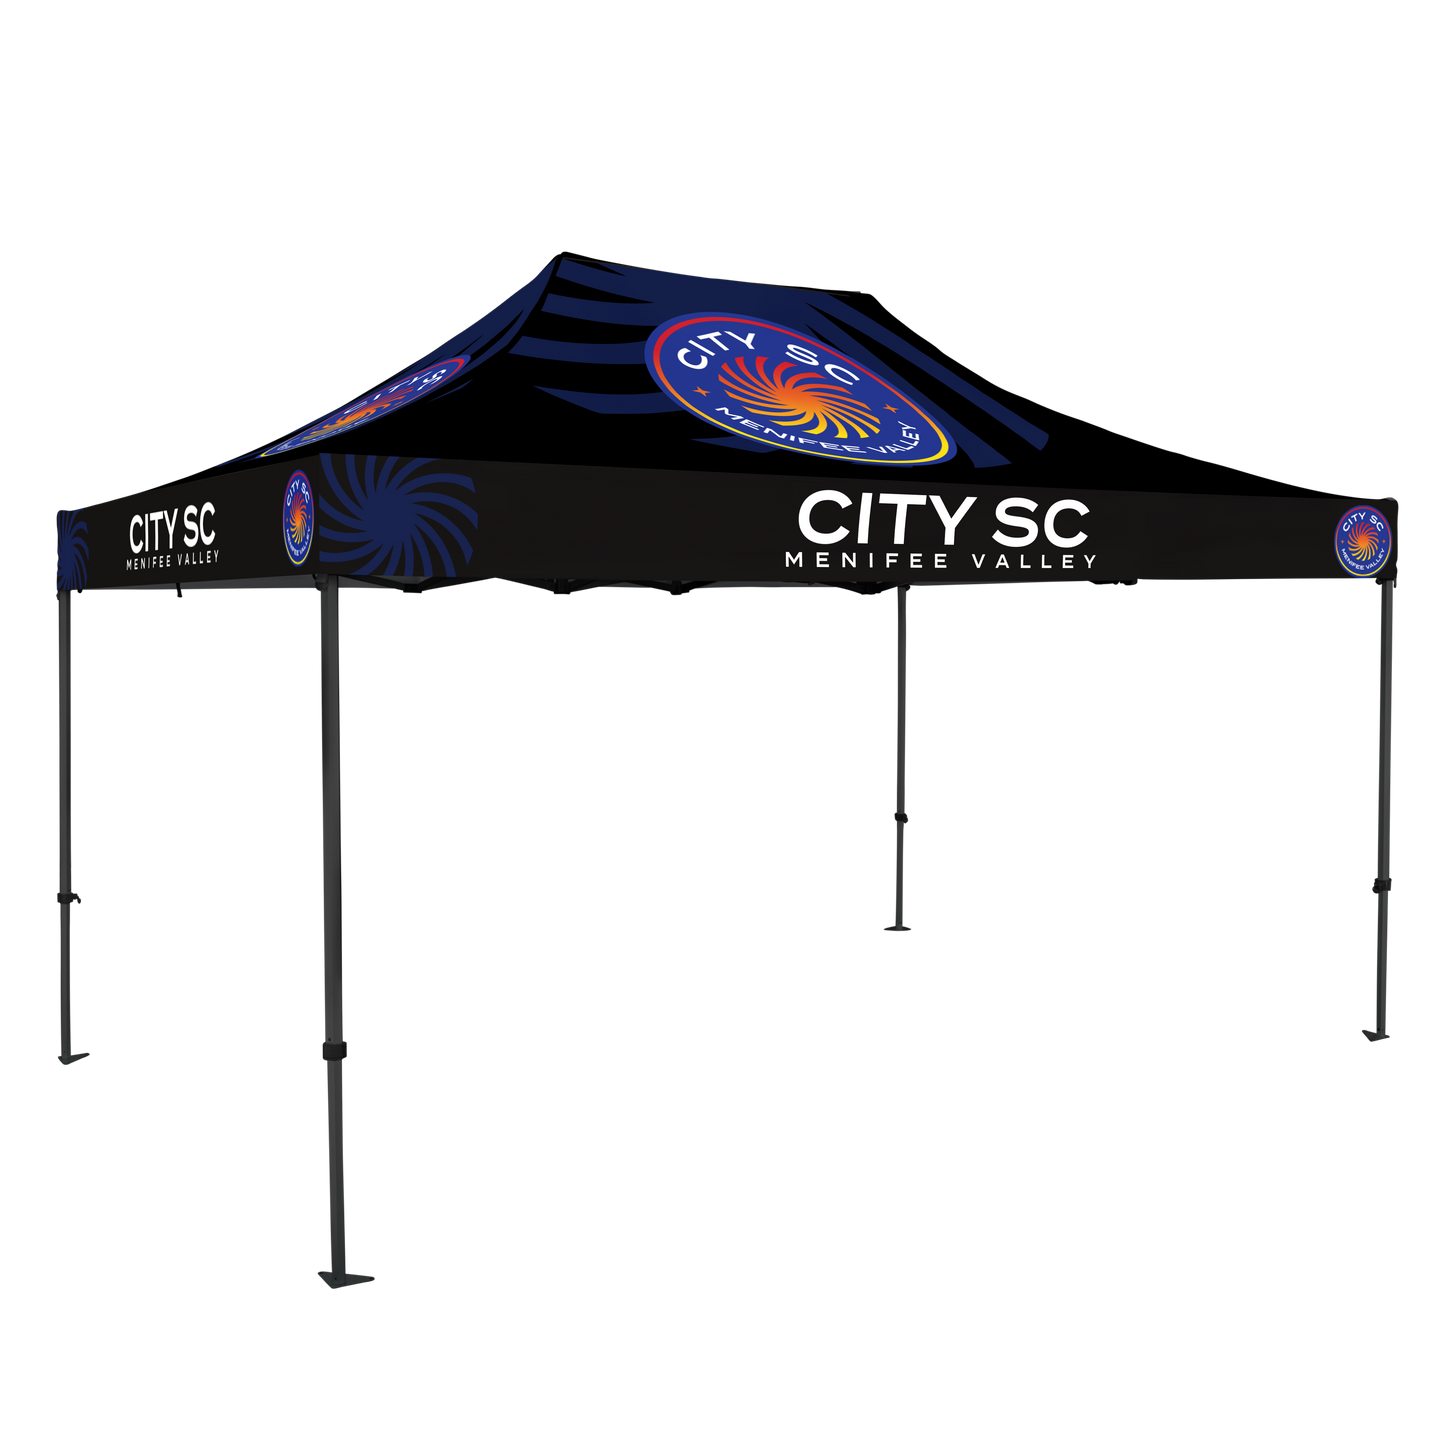 City SC Menifee Valley 10x15 Canopy Kit